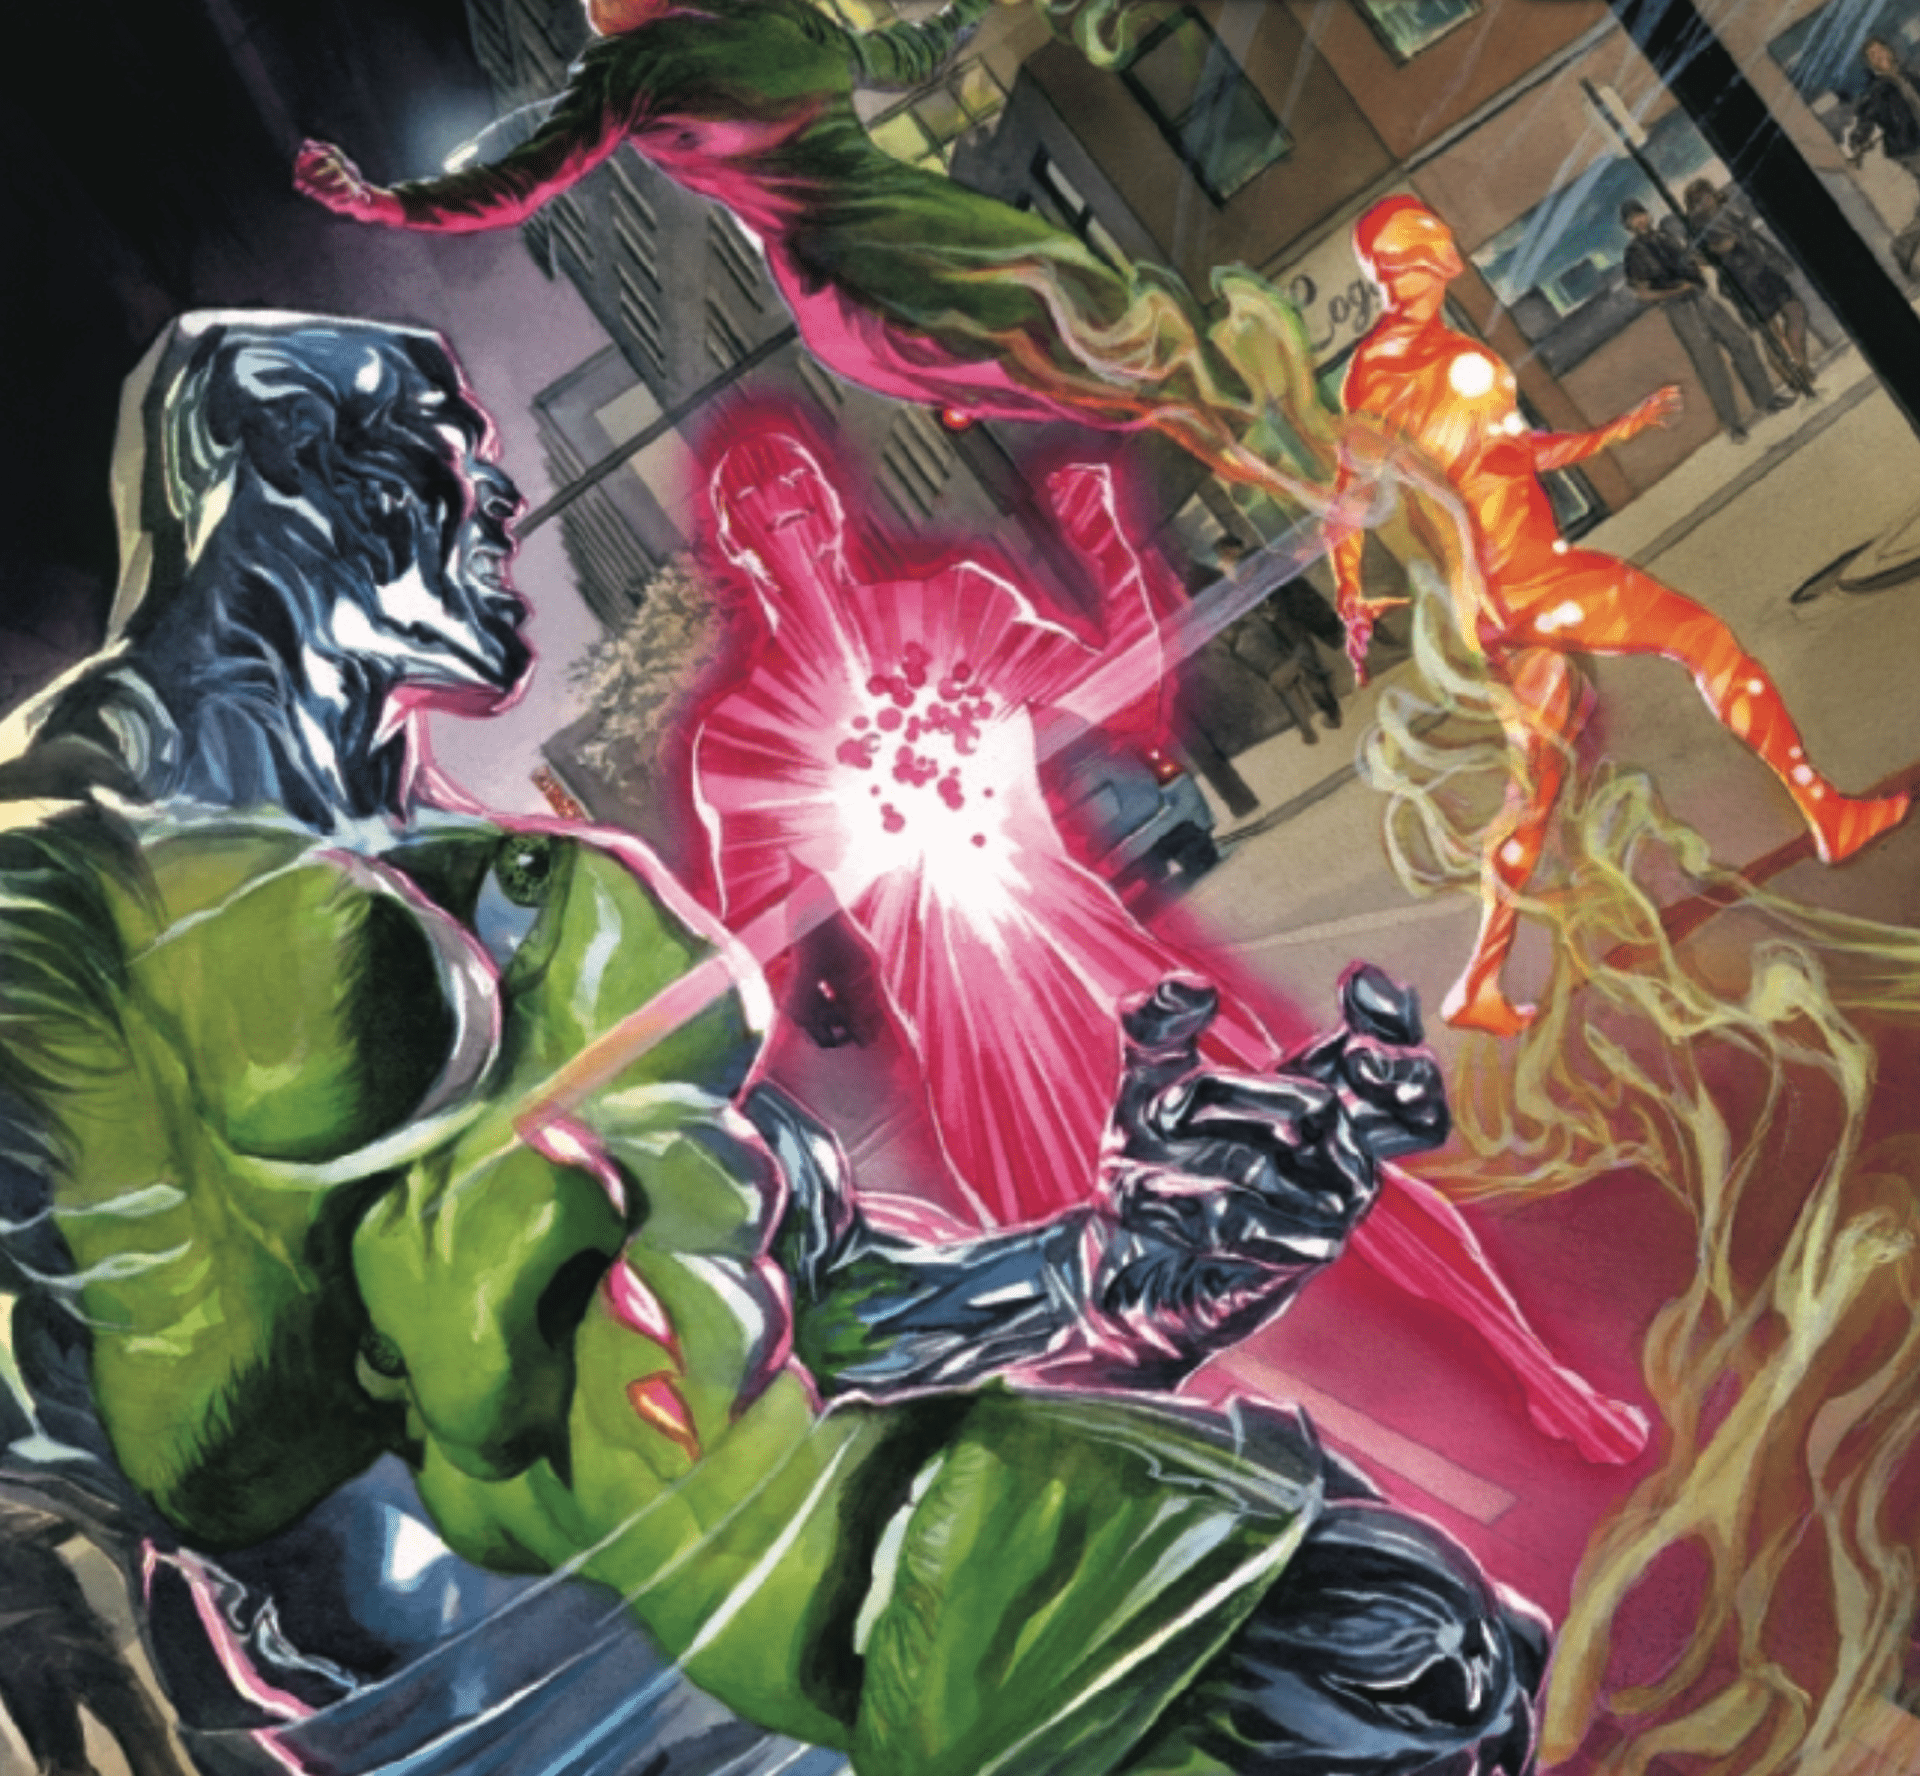 Artist Joe Bennett issues statement on antisemitic imagery in 'Immortal Hulk' #43